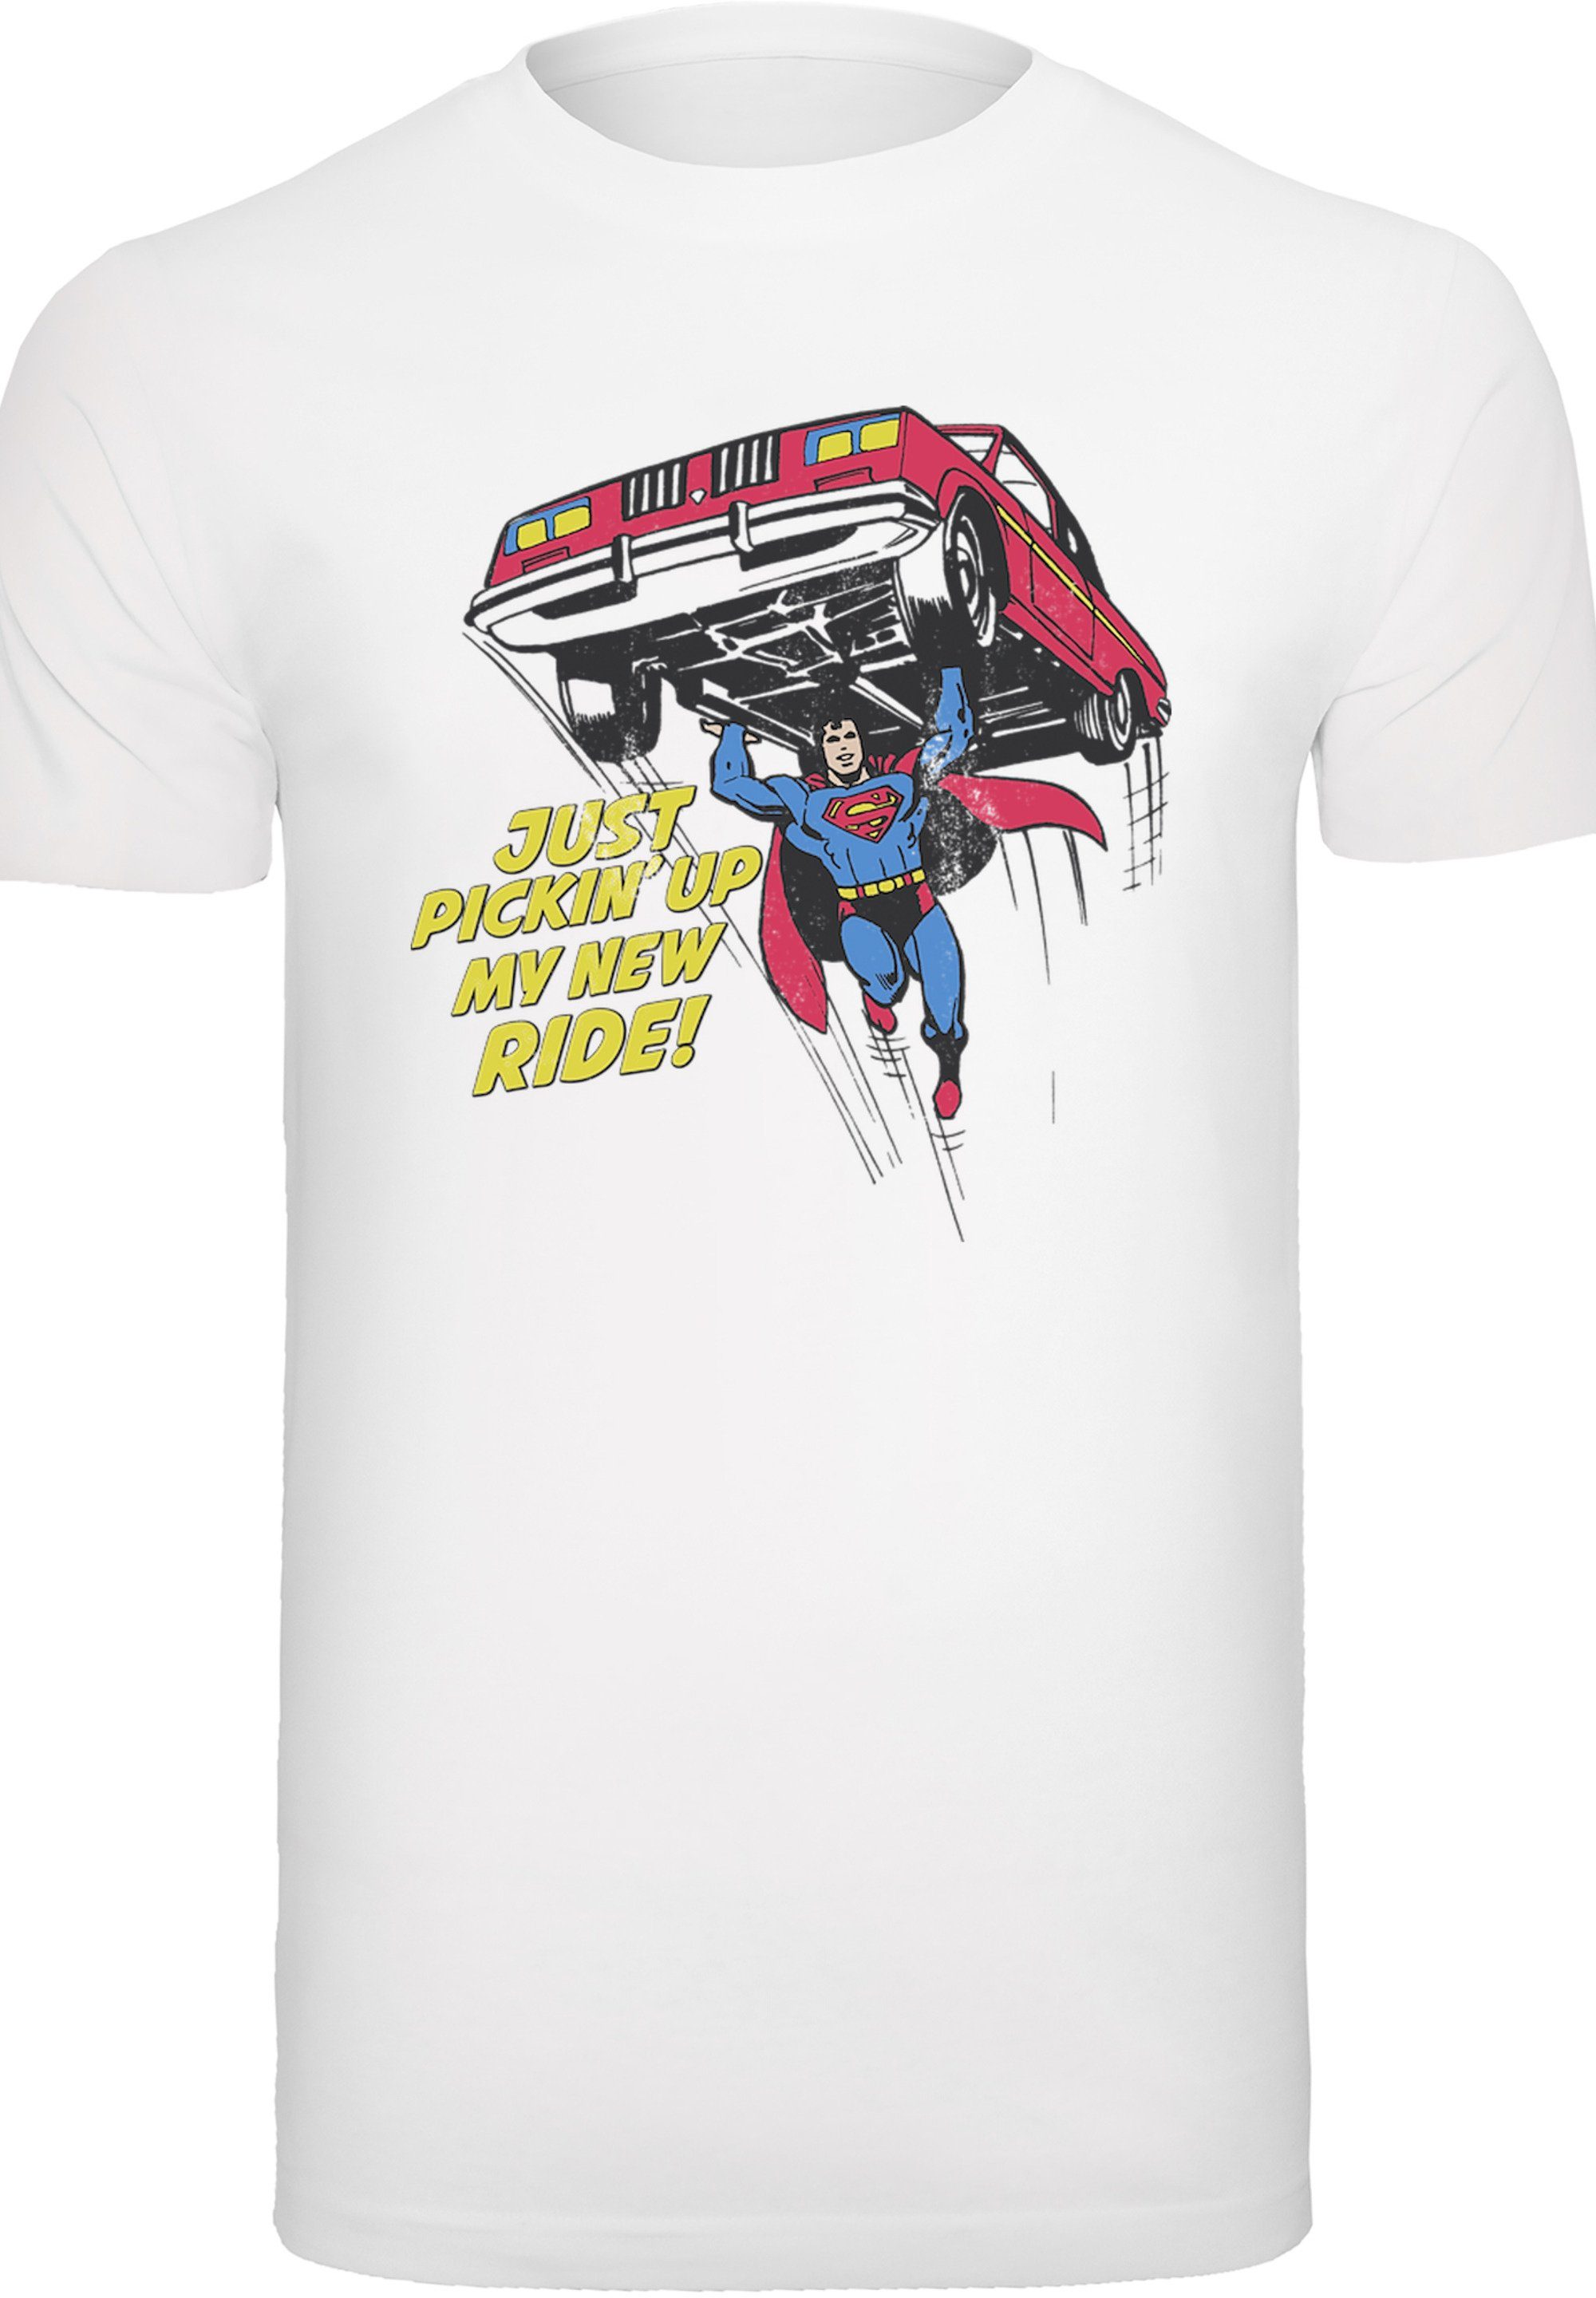 F4NT4STIC T-Shirt DC Comics Superman weiß Superheld Print New Ride